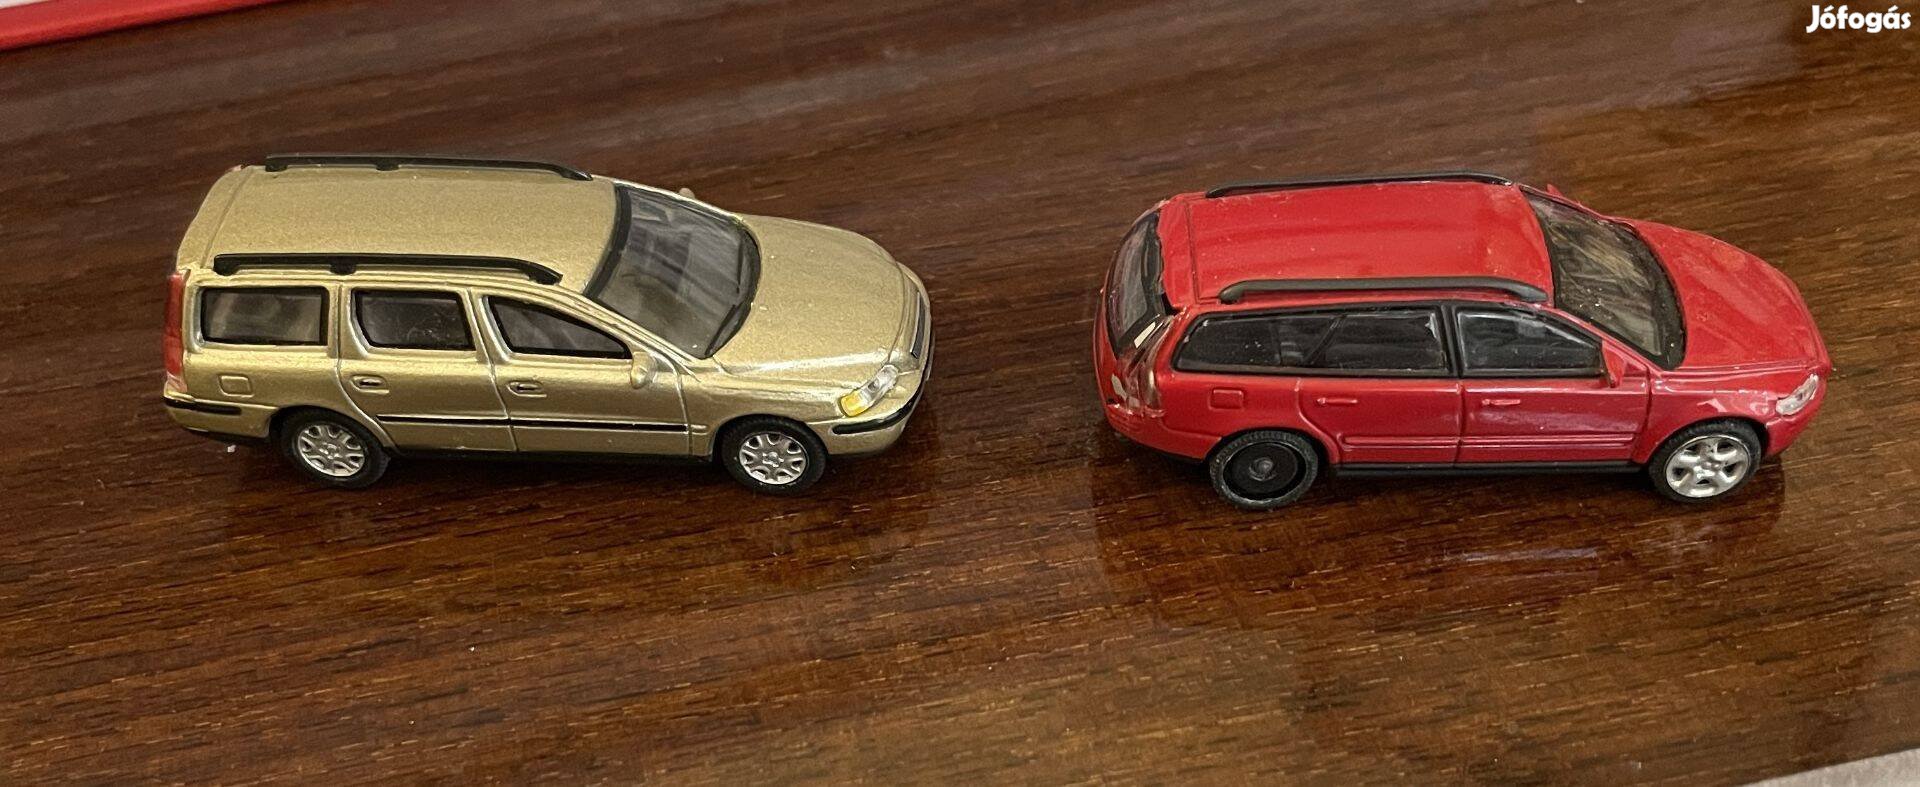 Volvo V70 és Volvo V50 kisautó modell doboz nélkül